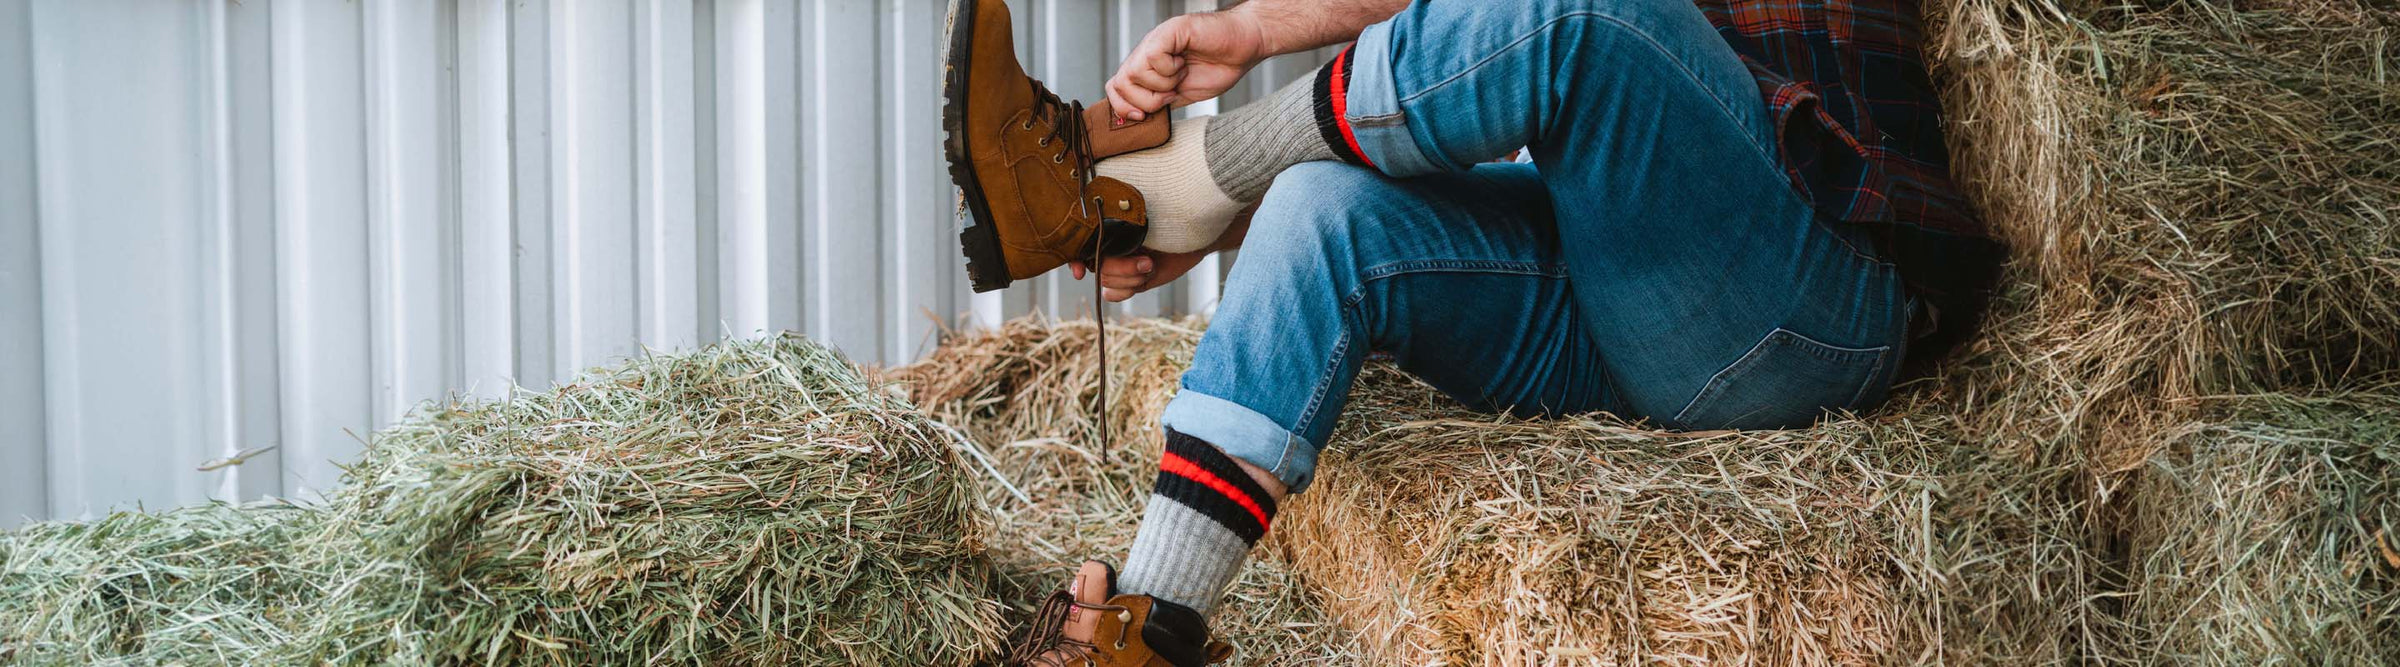 Men's Boot & Field Socks – Fox River